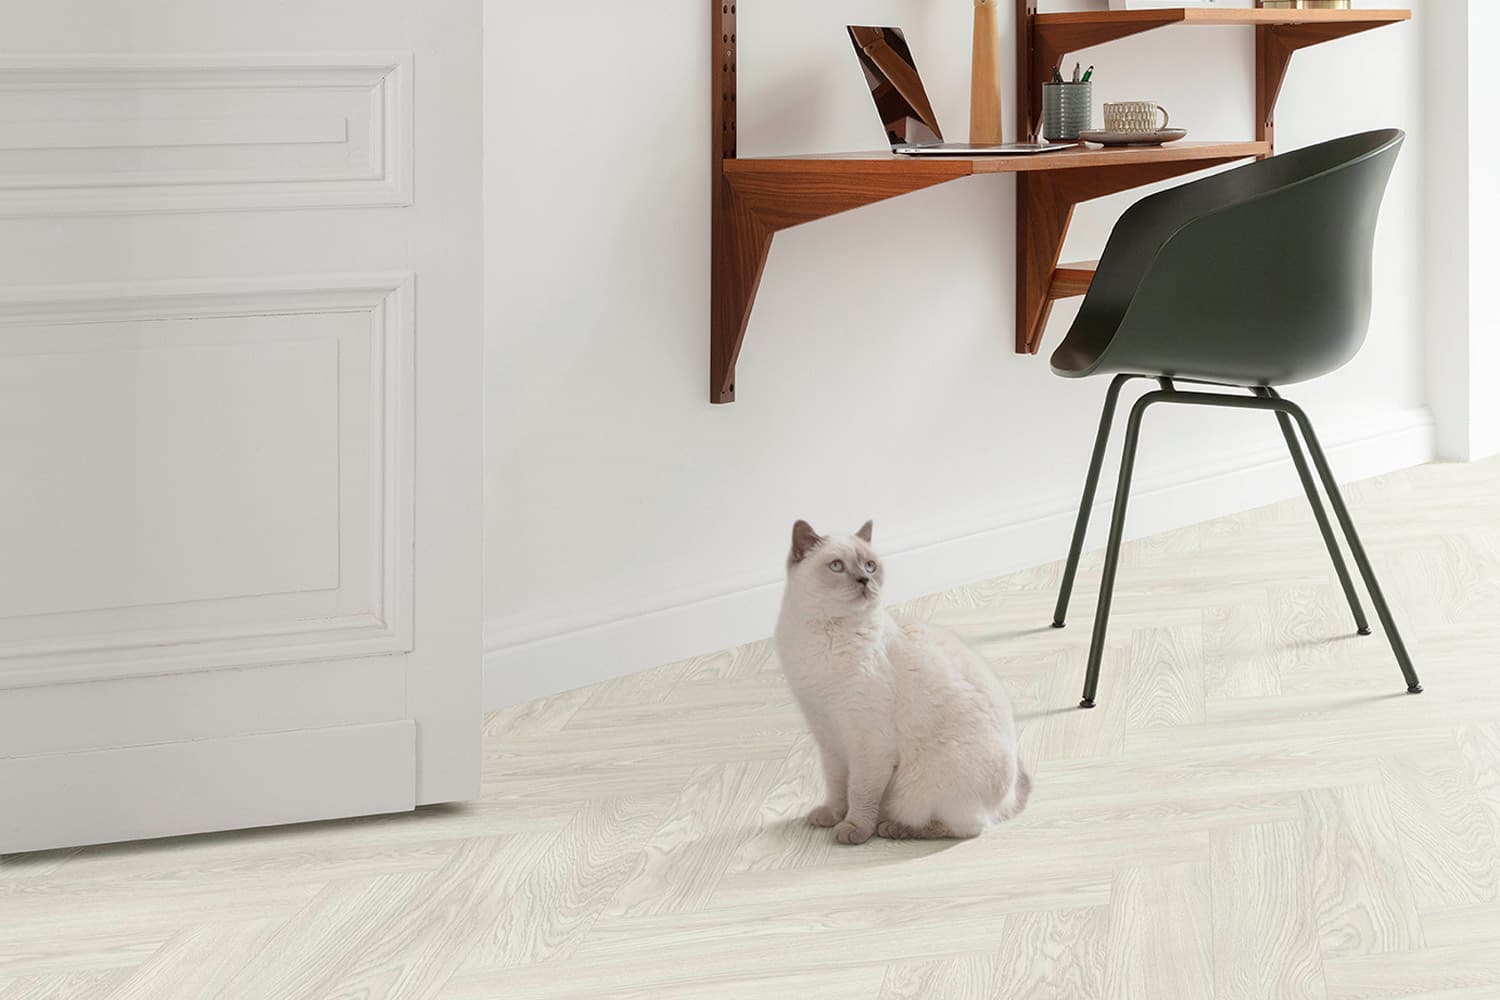 Interior image of a living space with cat - Laurel Oak 51104 - herringbone floor - light wood floor